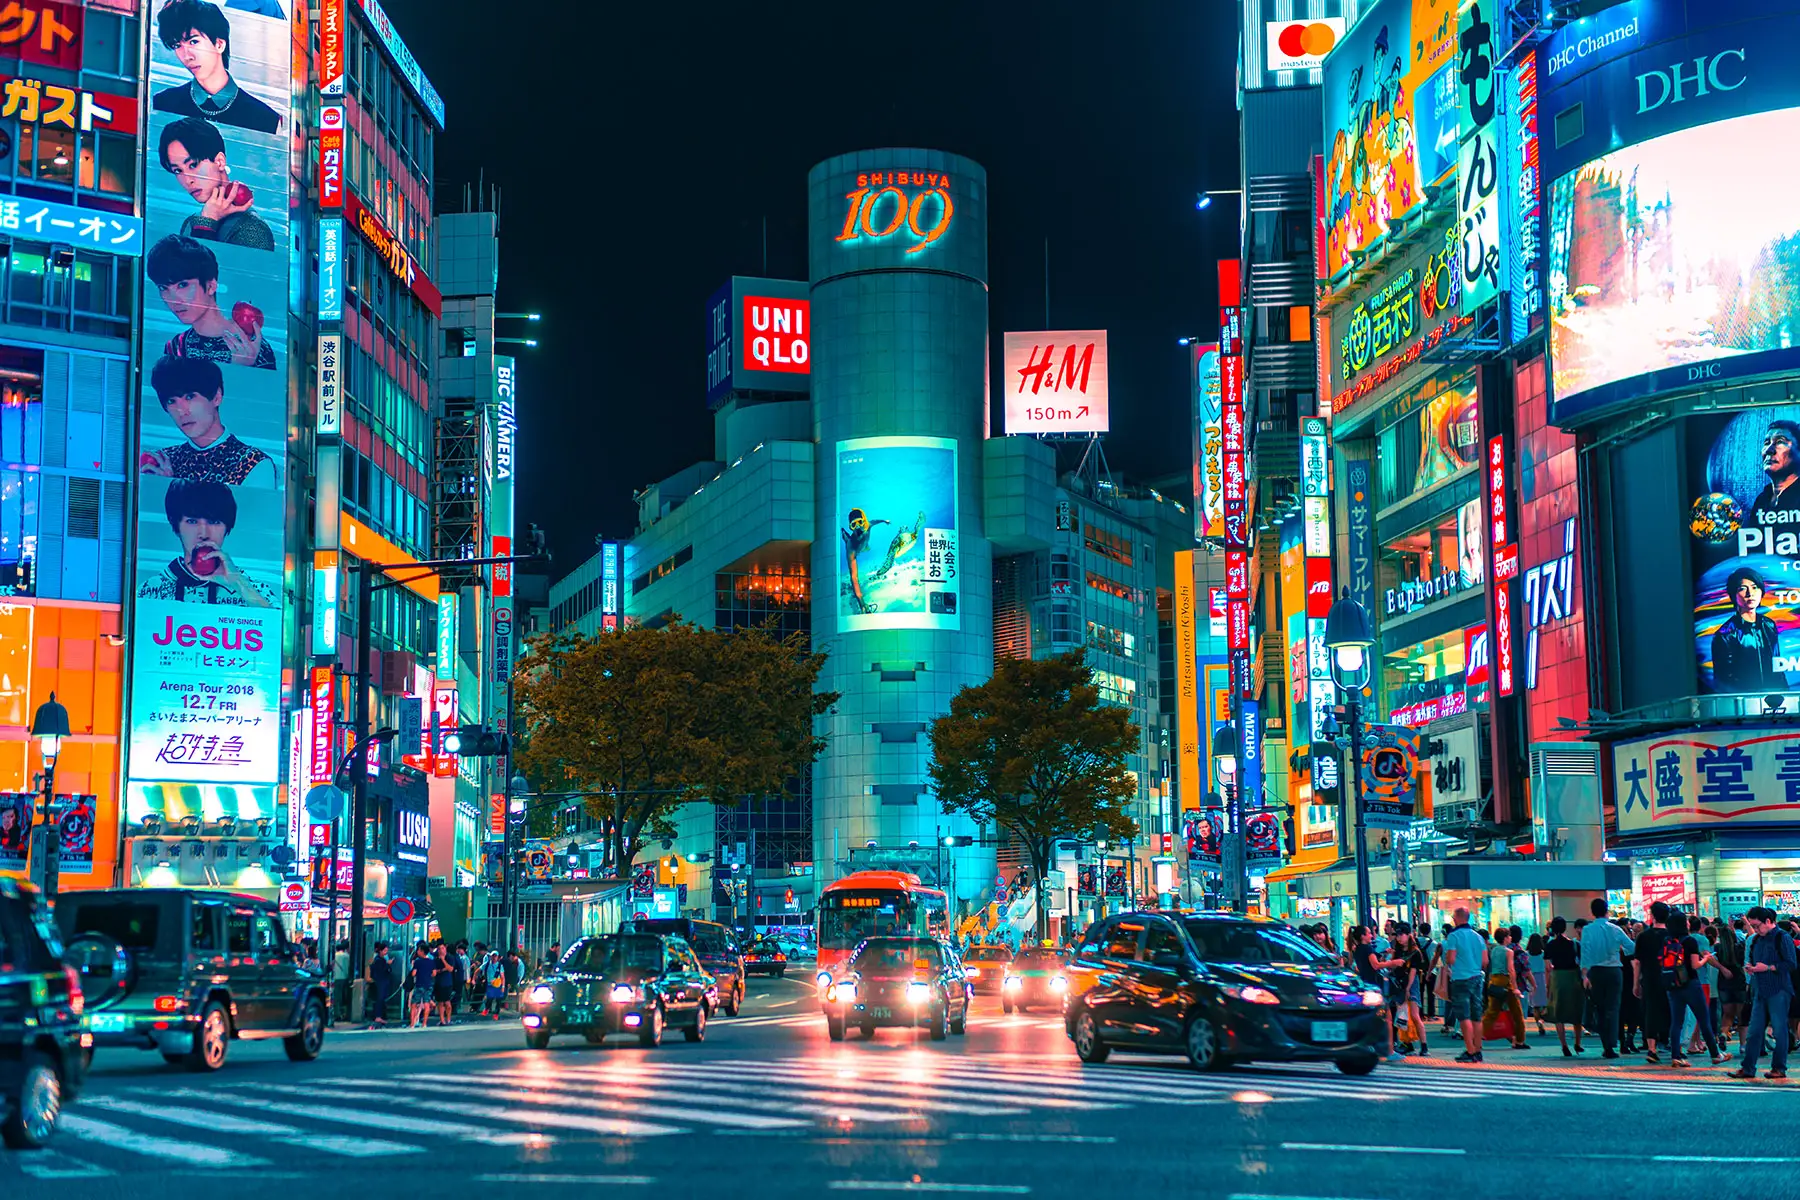 A night street scene with cars in Shibuya, Japan